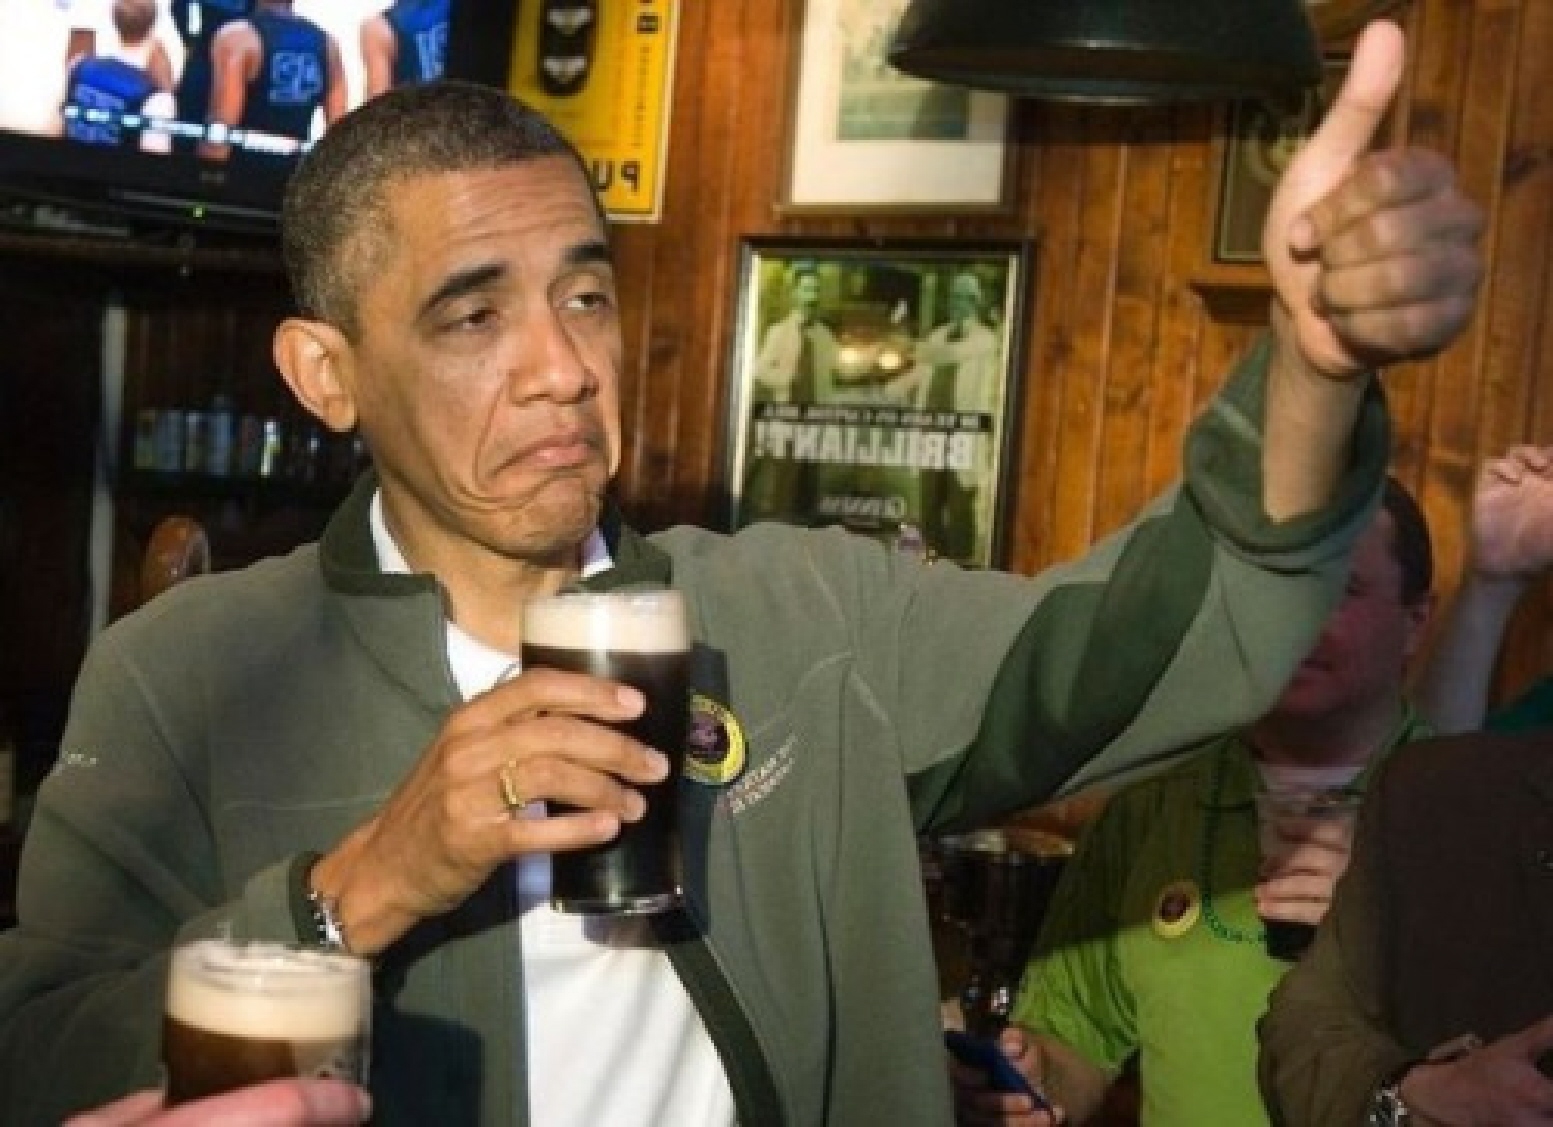 drunk-obama-thumbs-up1.jpg